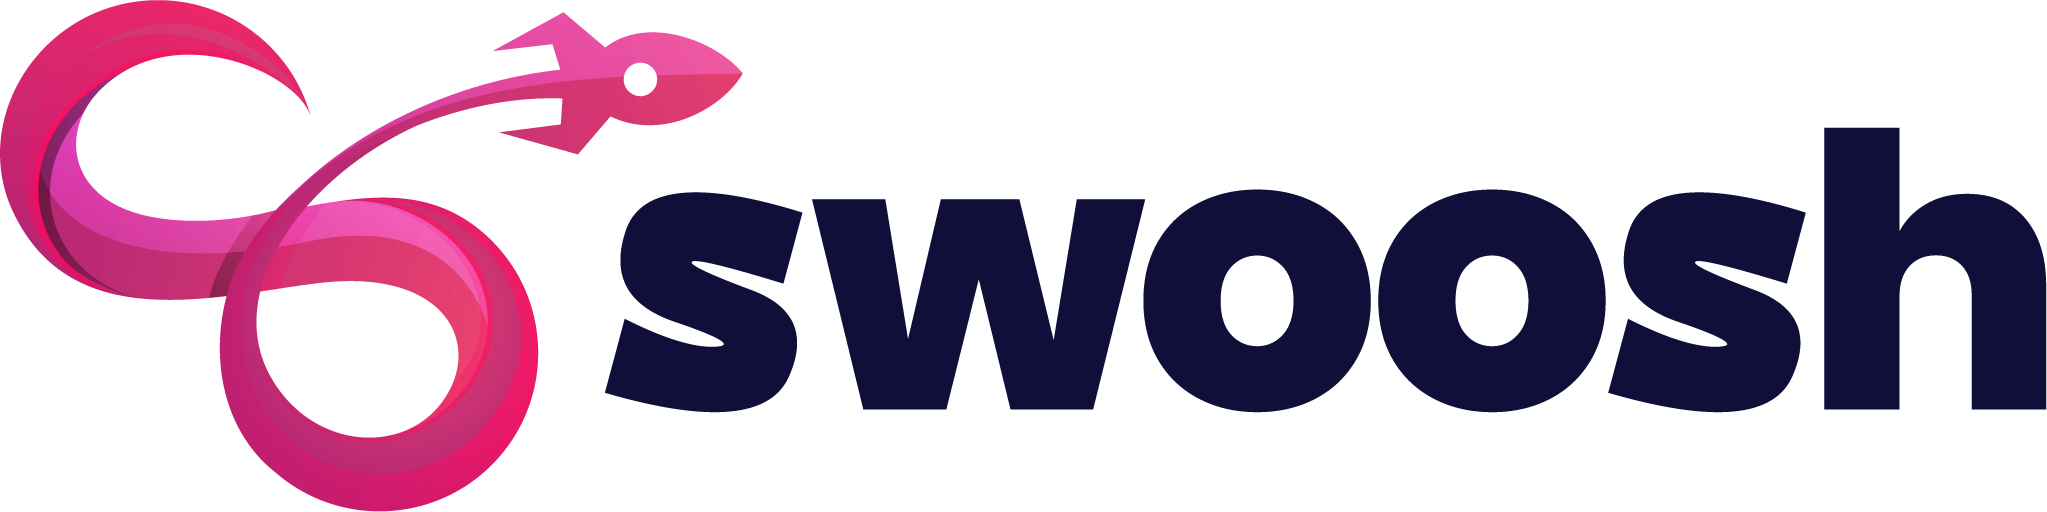 Swoosh_logo_High Res (1).png